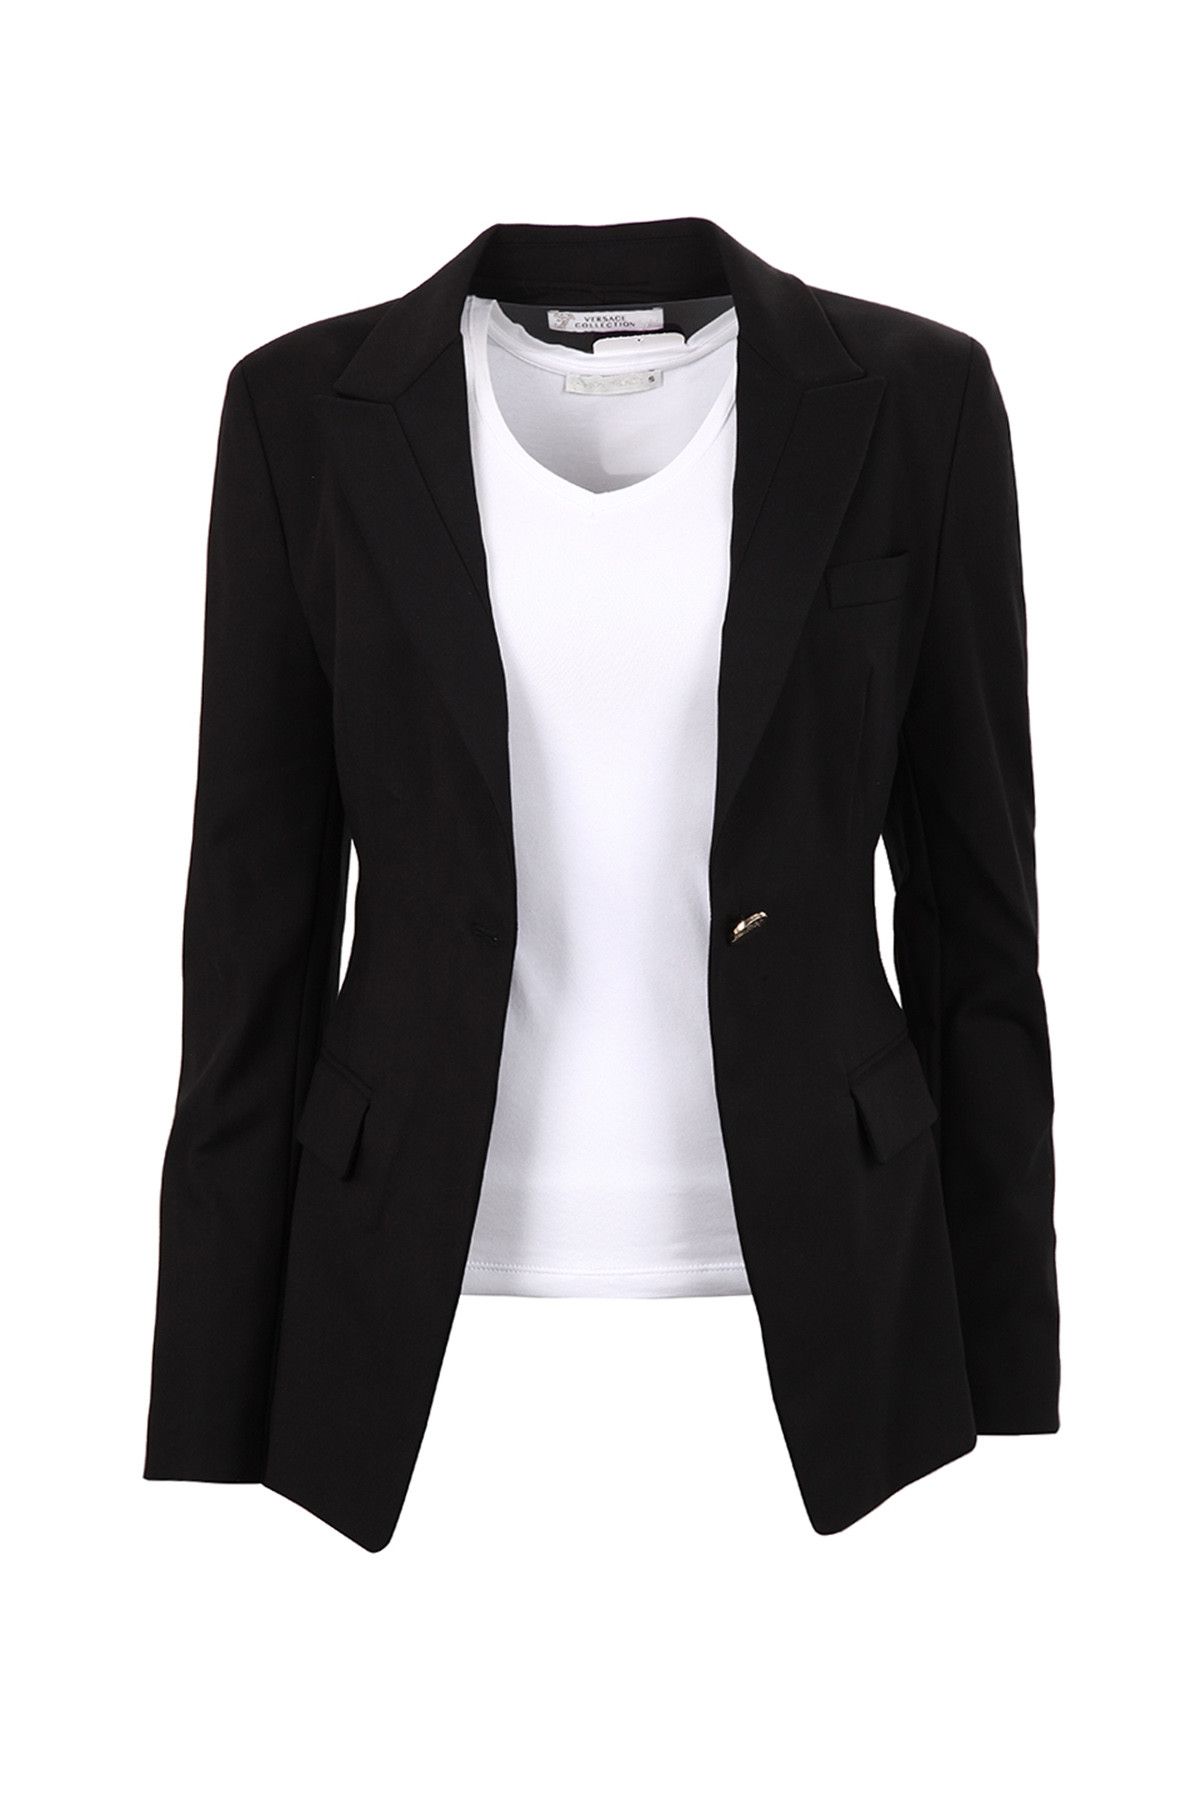 Versace Siyah Kadın Ceket G601945G33659